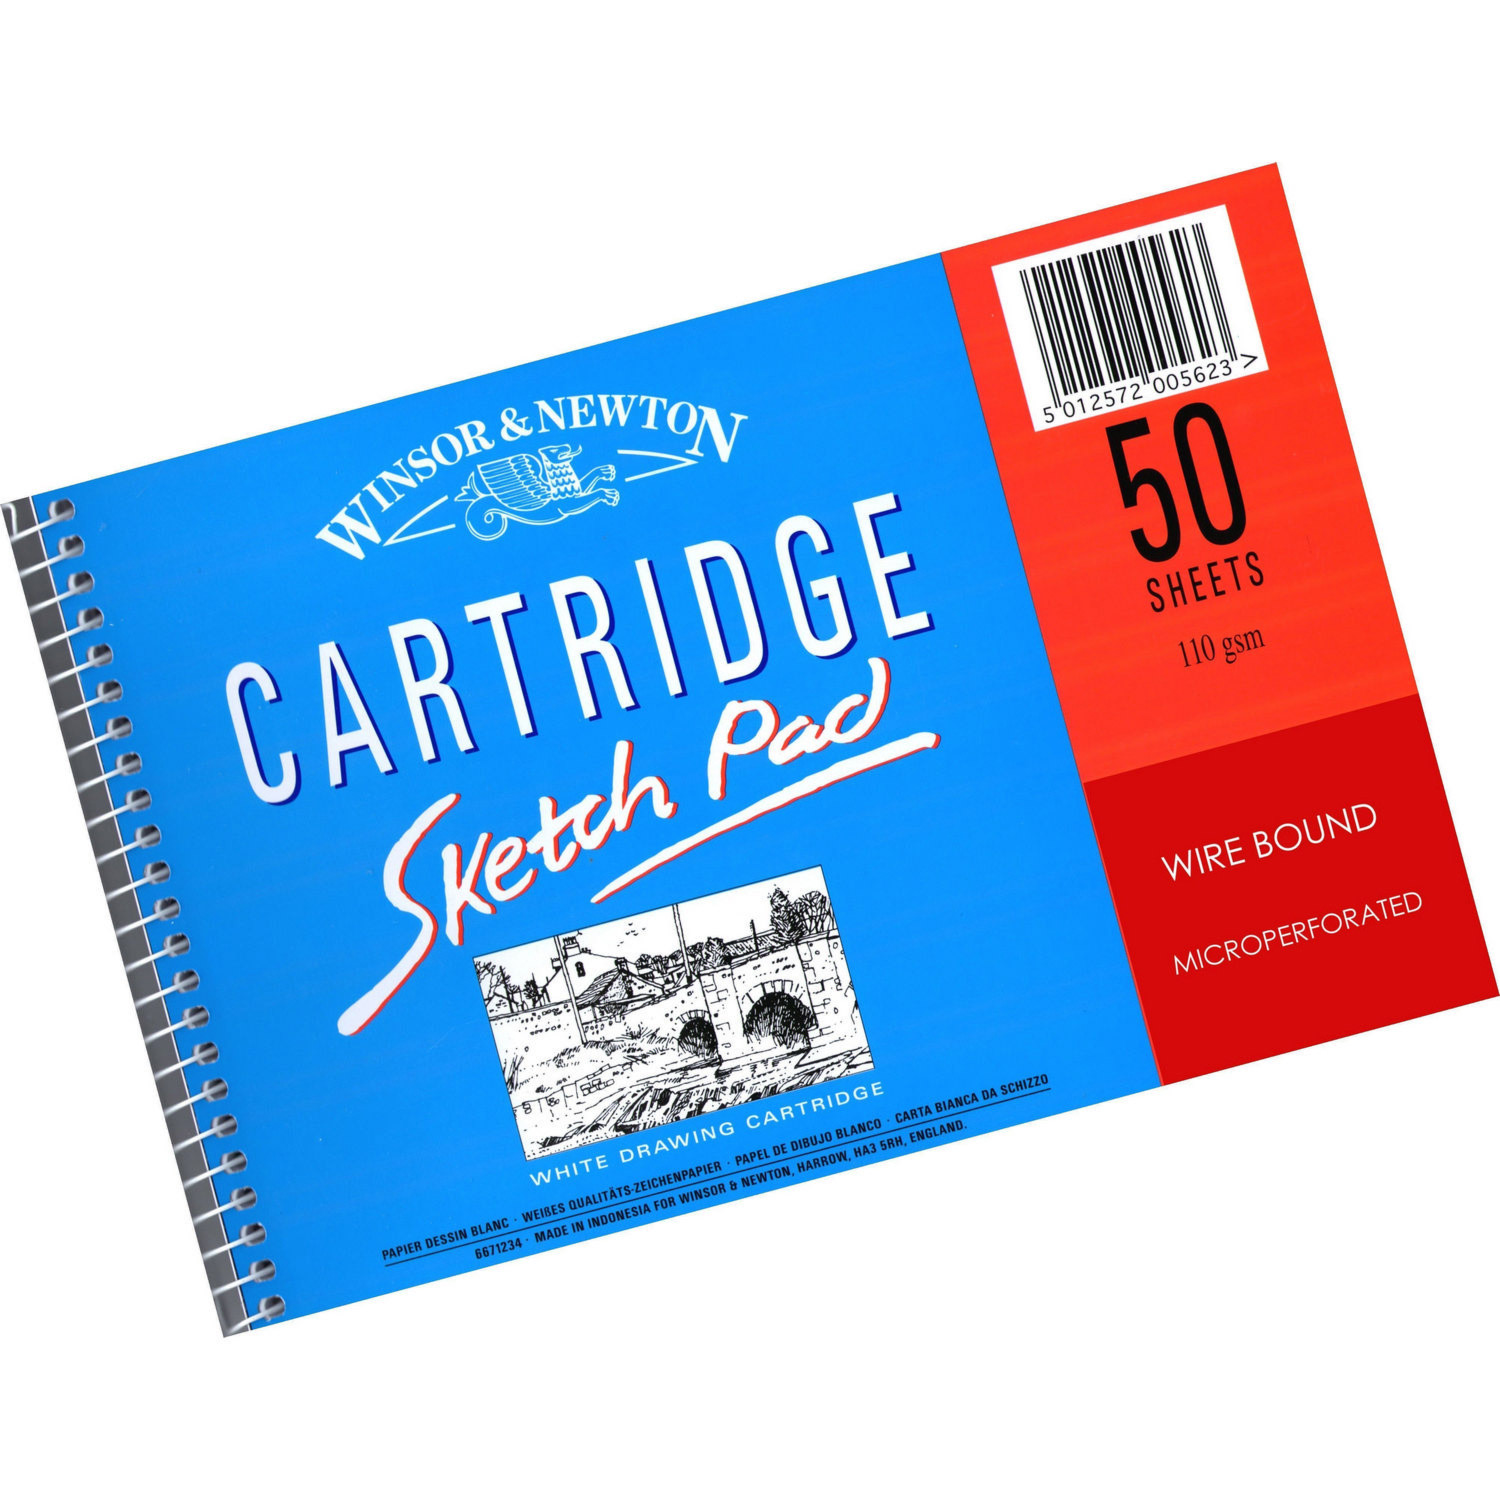 Winsor and Newton Cartridge 50 Sheet Sketch Pad - A5 Image